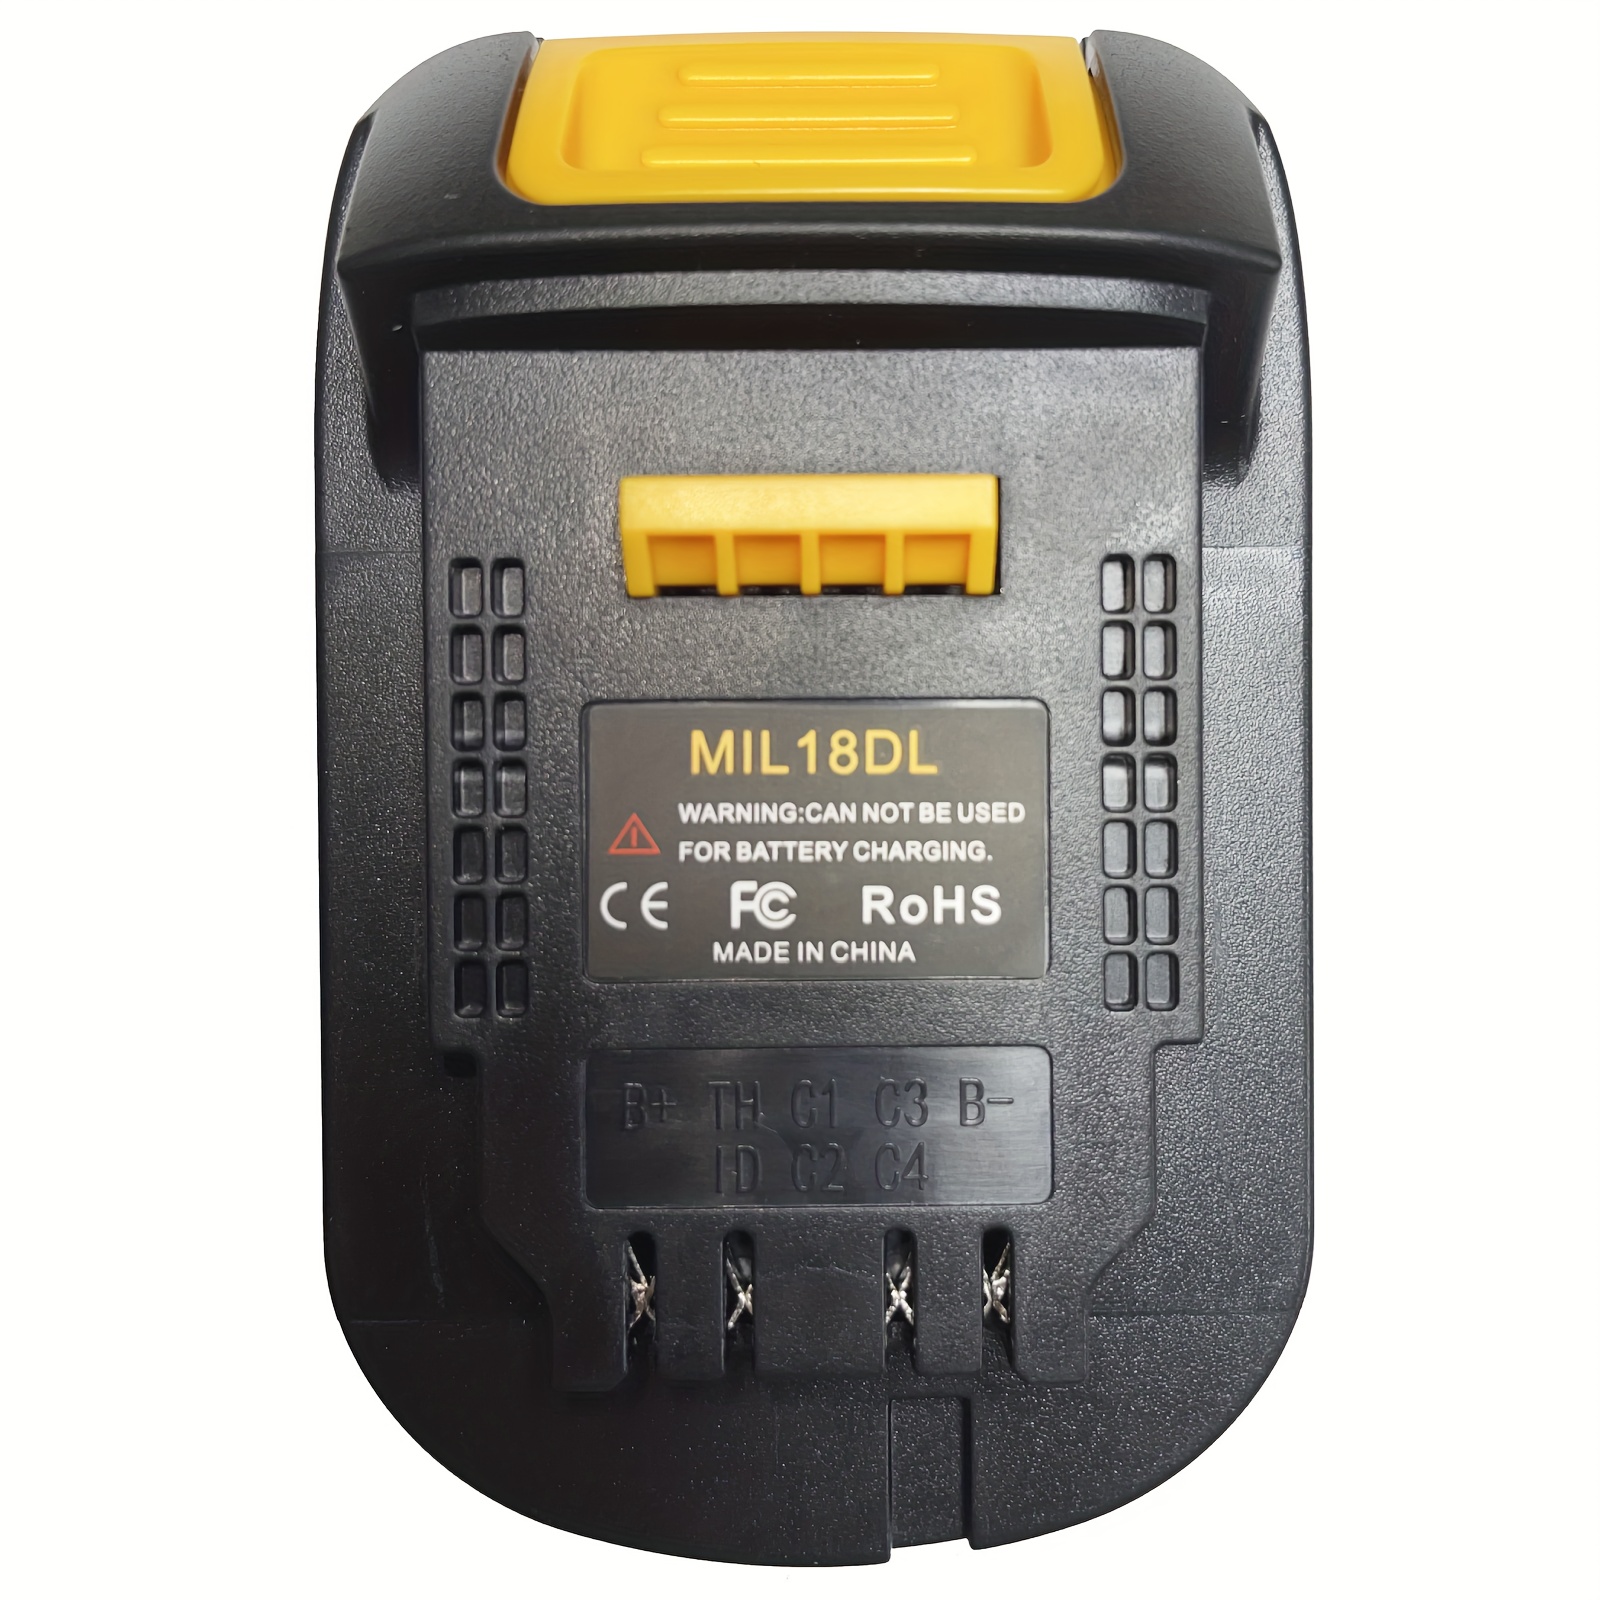 Makita Battery Adapter to Milwaukee M18 18V Cordless Tool